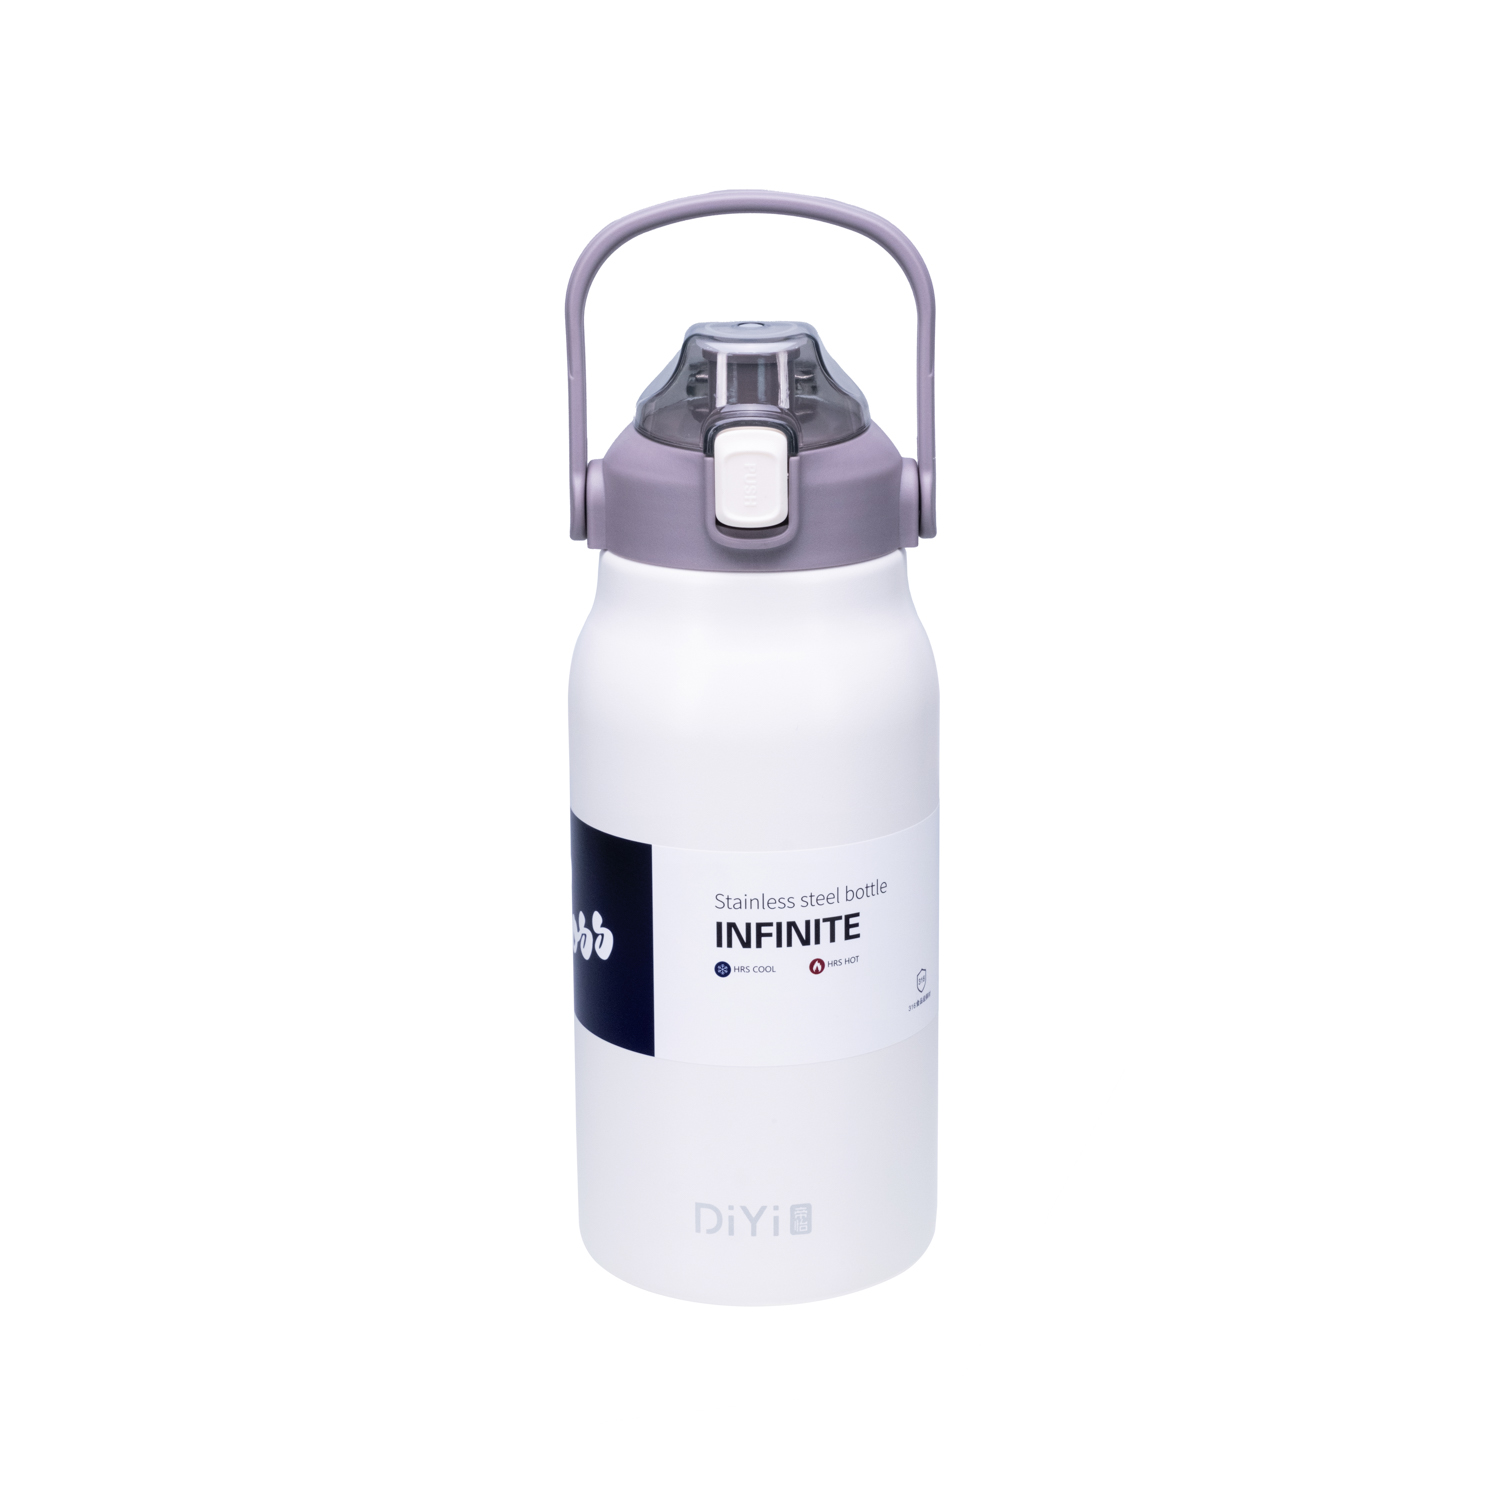 DIYI Large Capacity Thermal Bottle